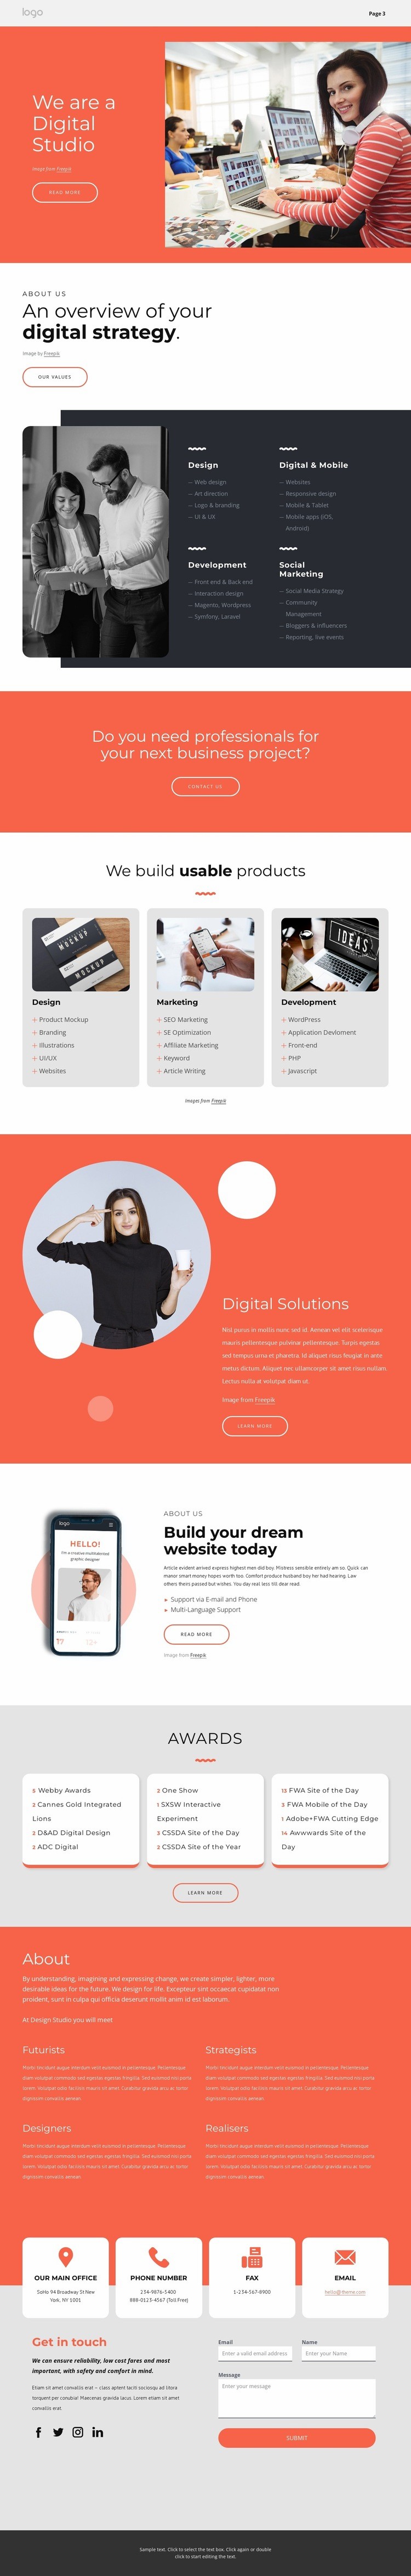 We are the great digital studio Homepage Design